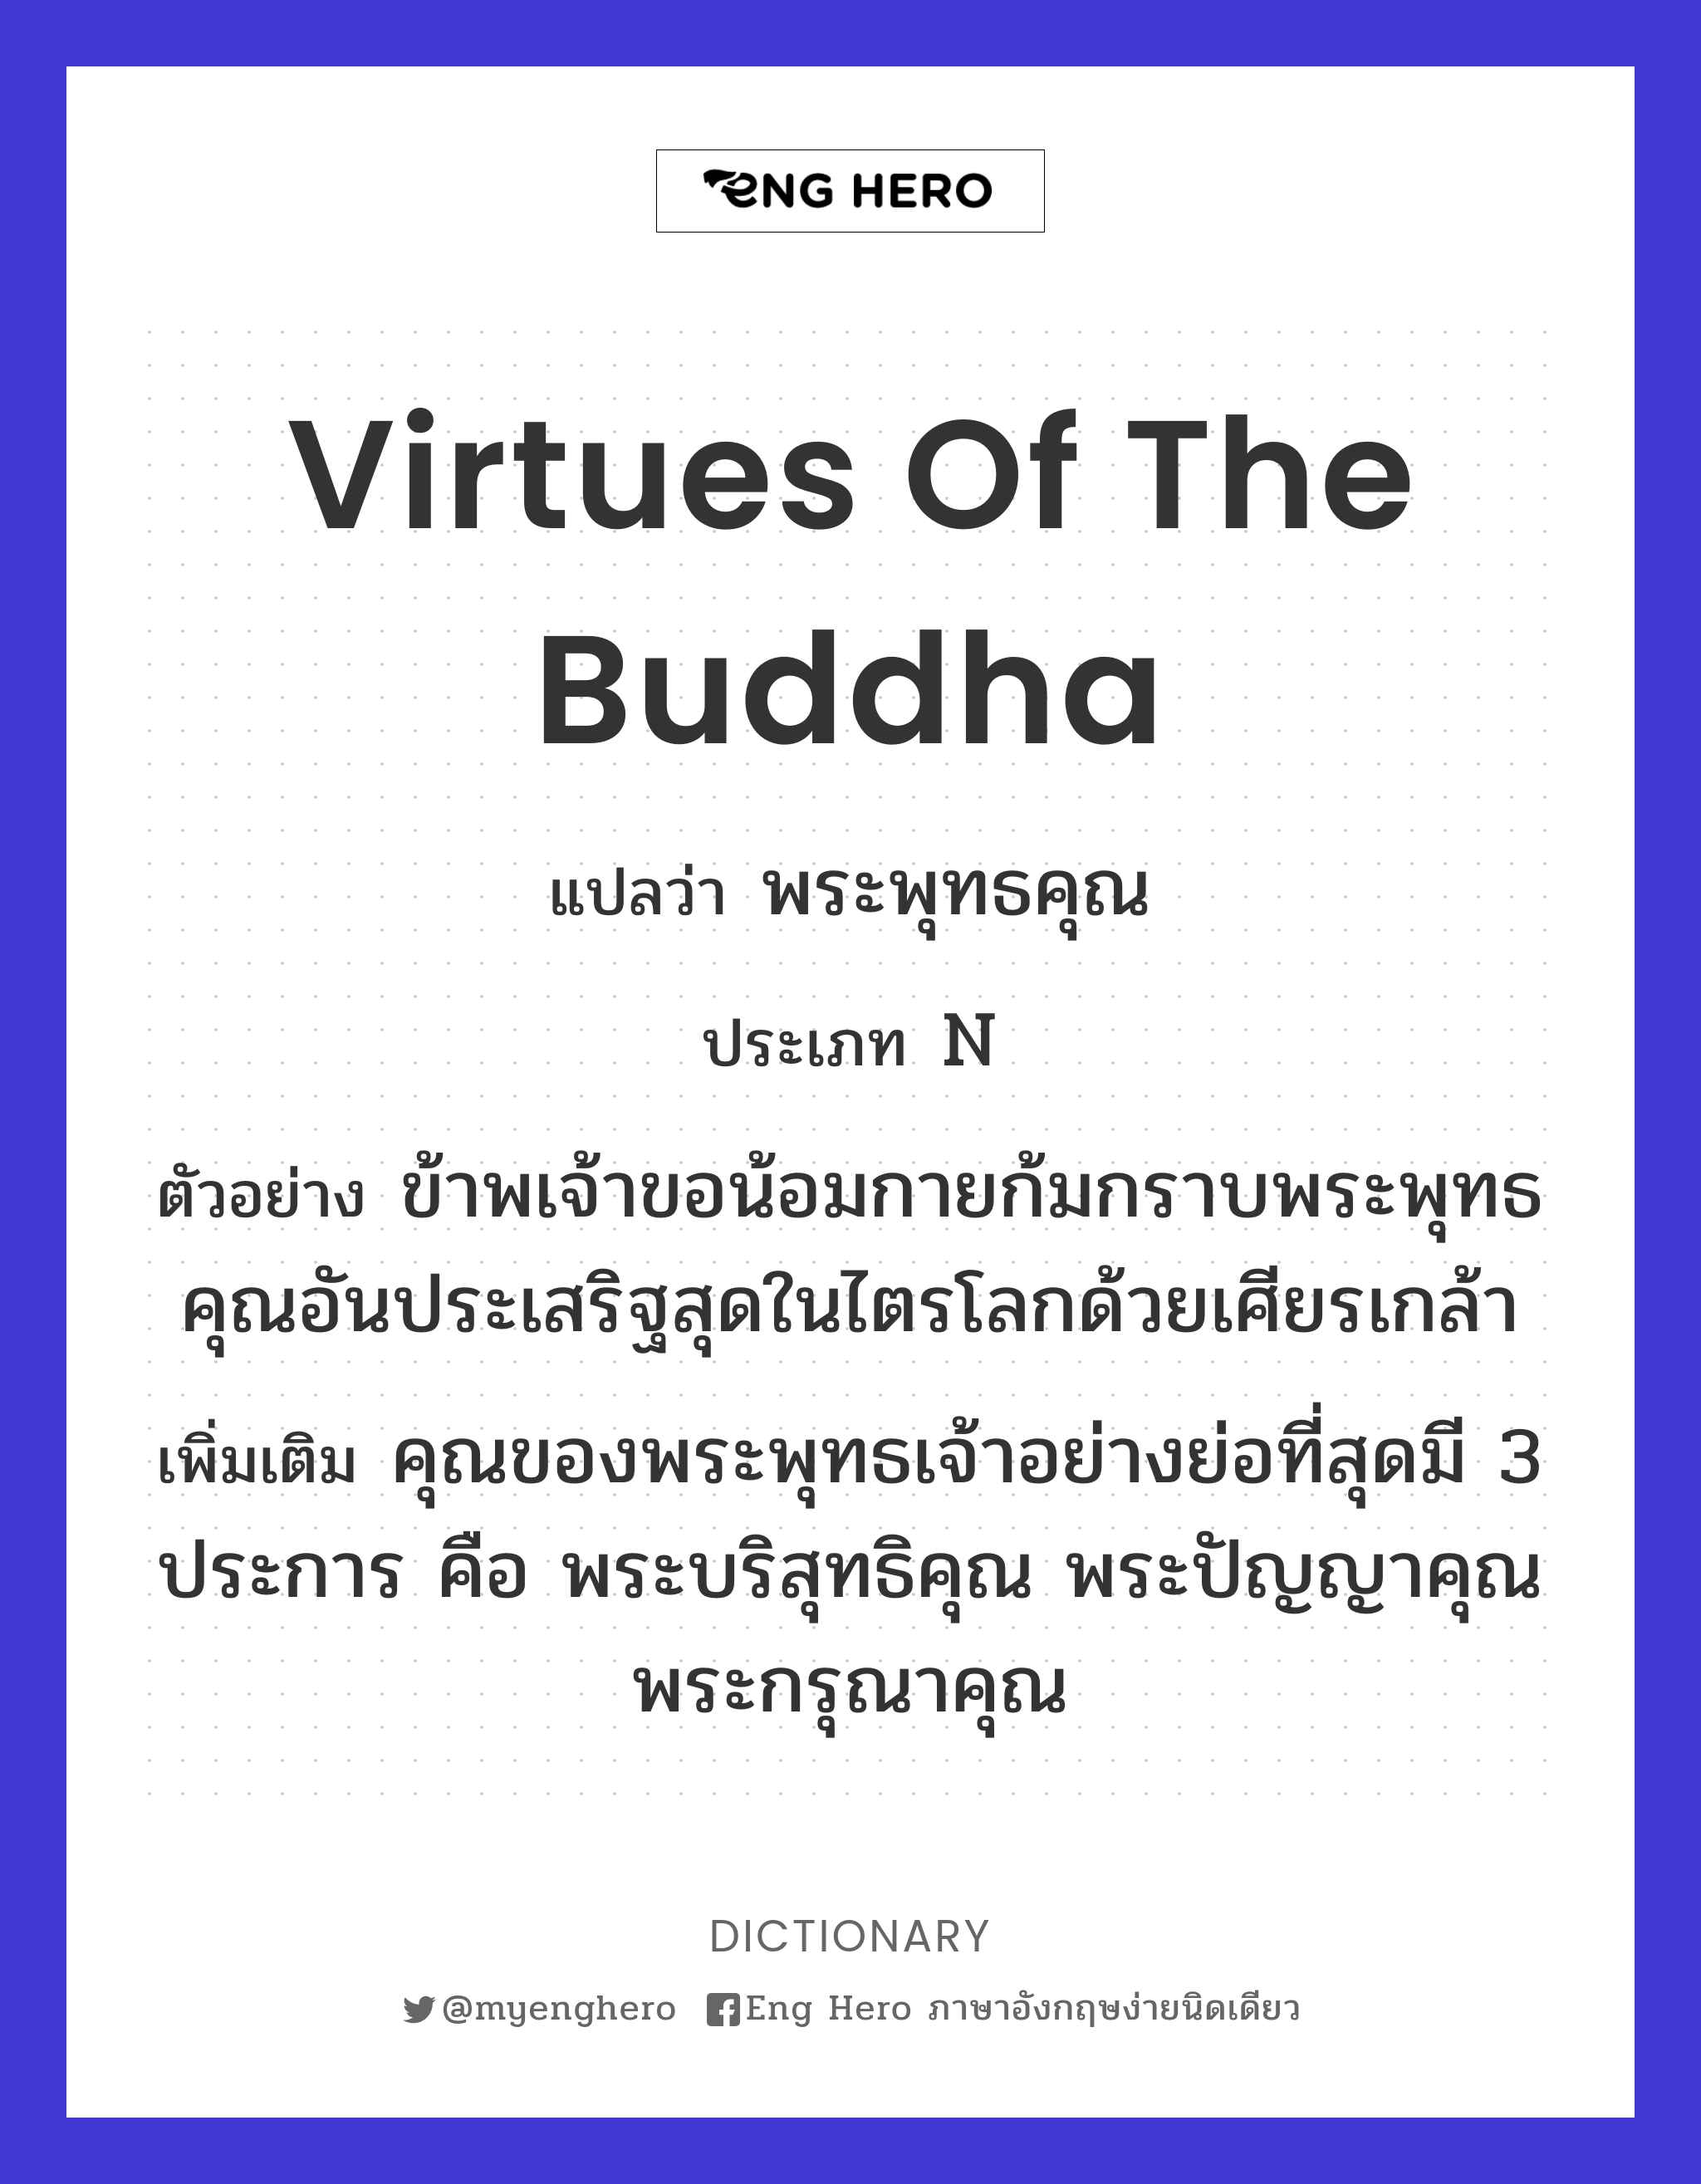 virtues of the Buddha